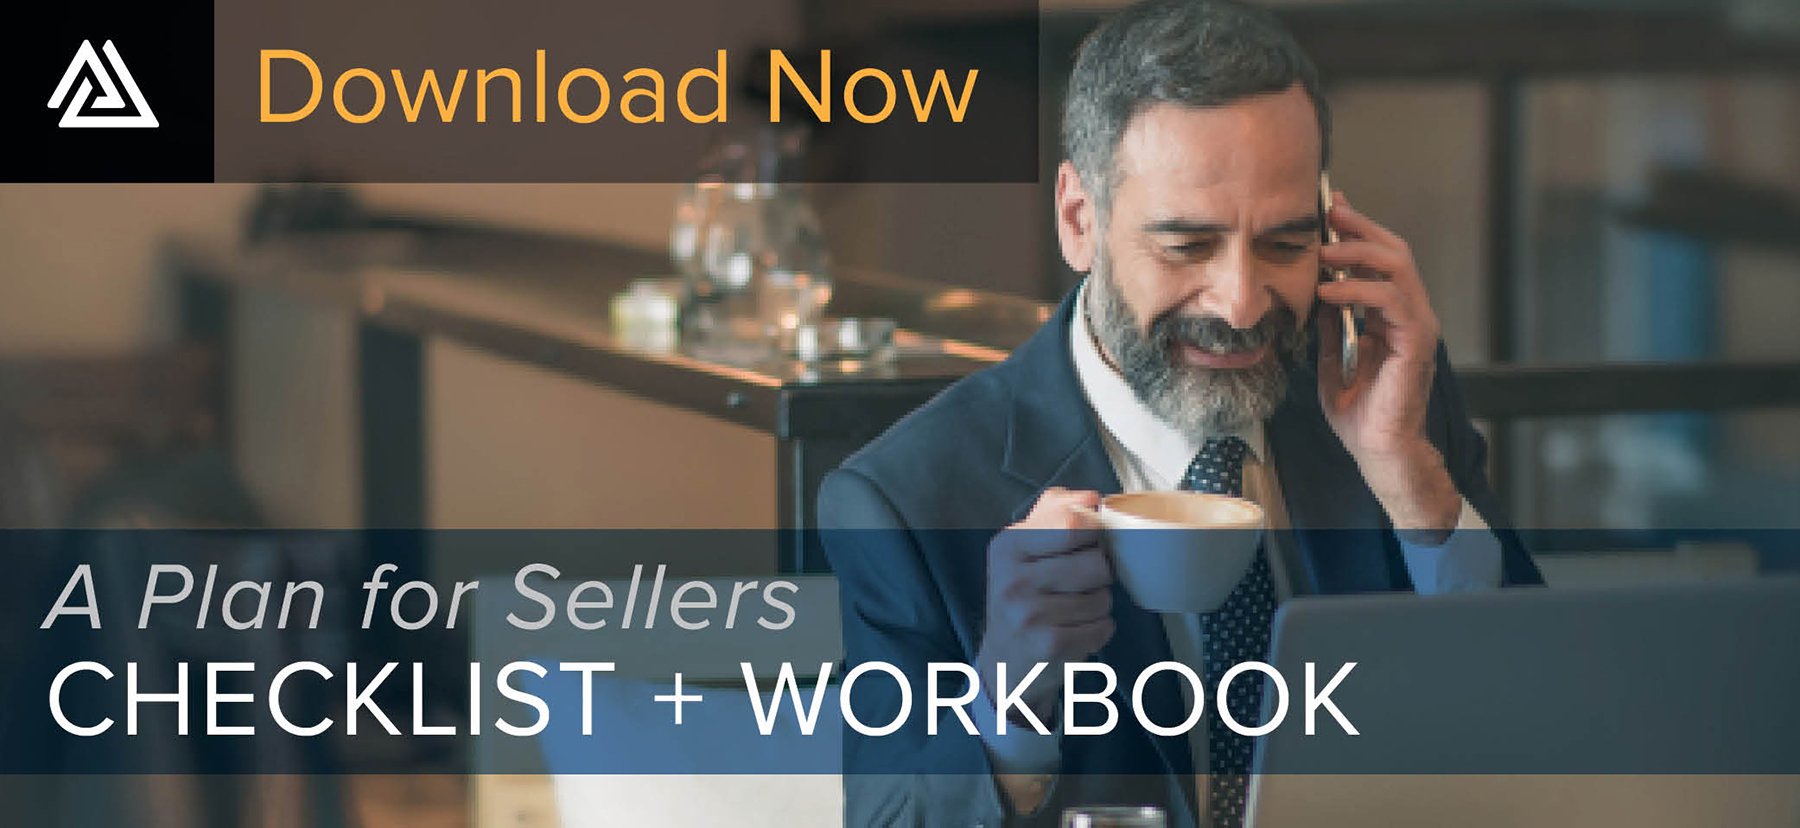 plan-for-sellers-checklist+workbook-cta